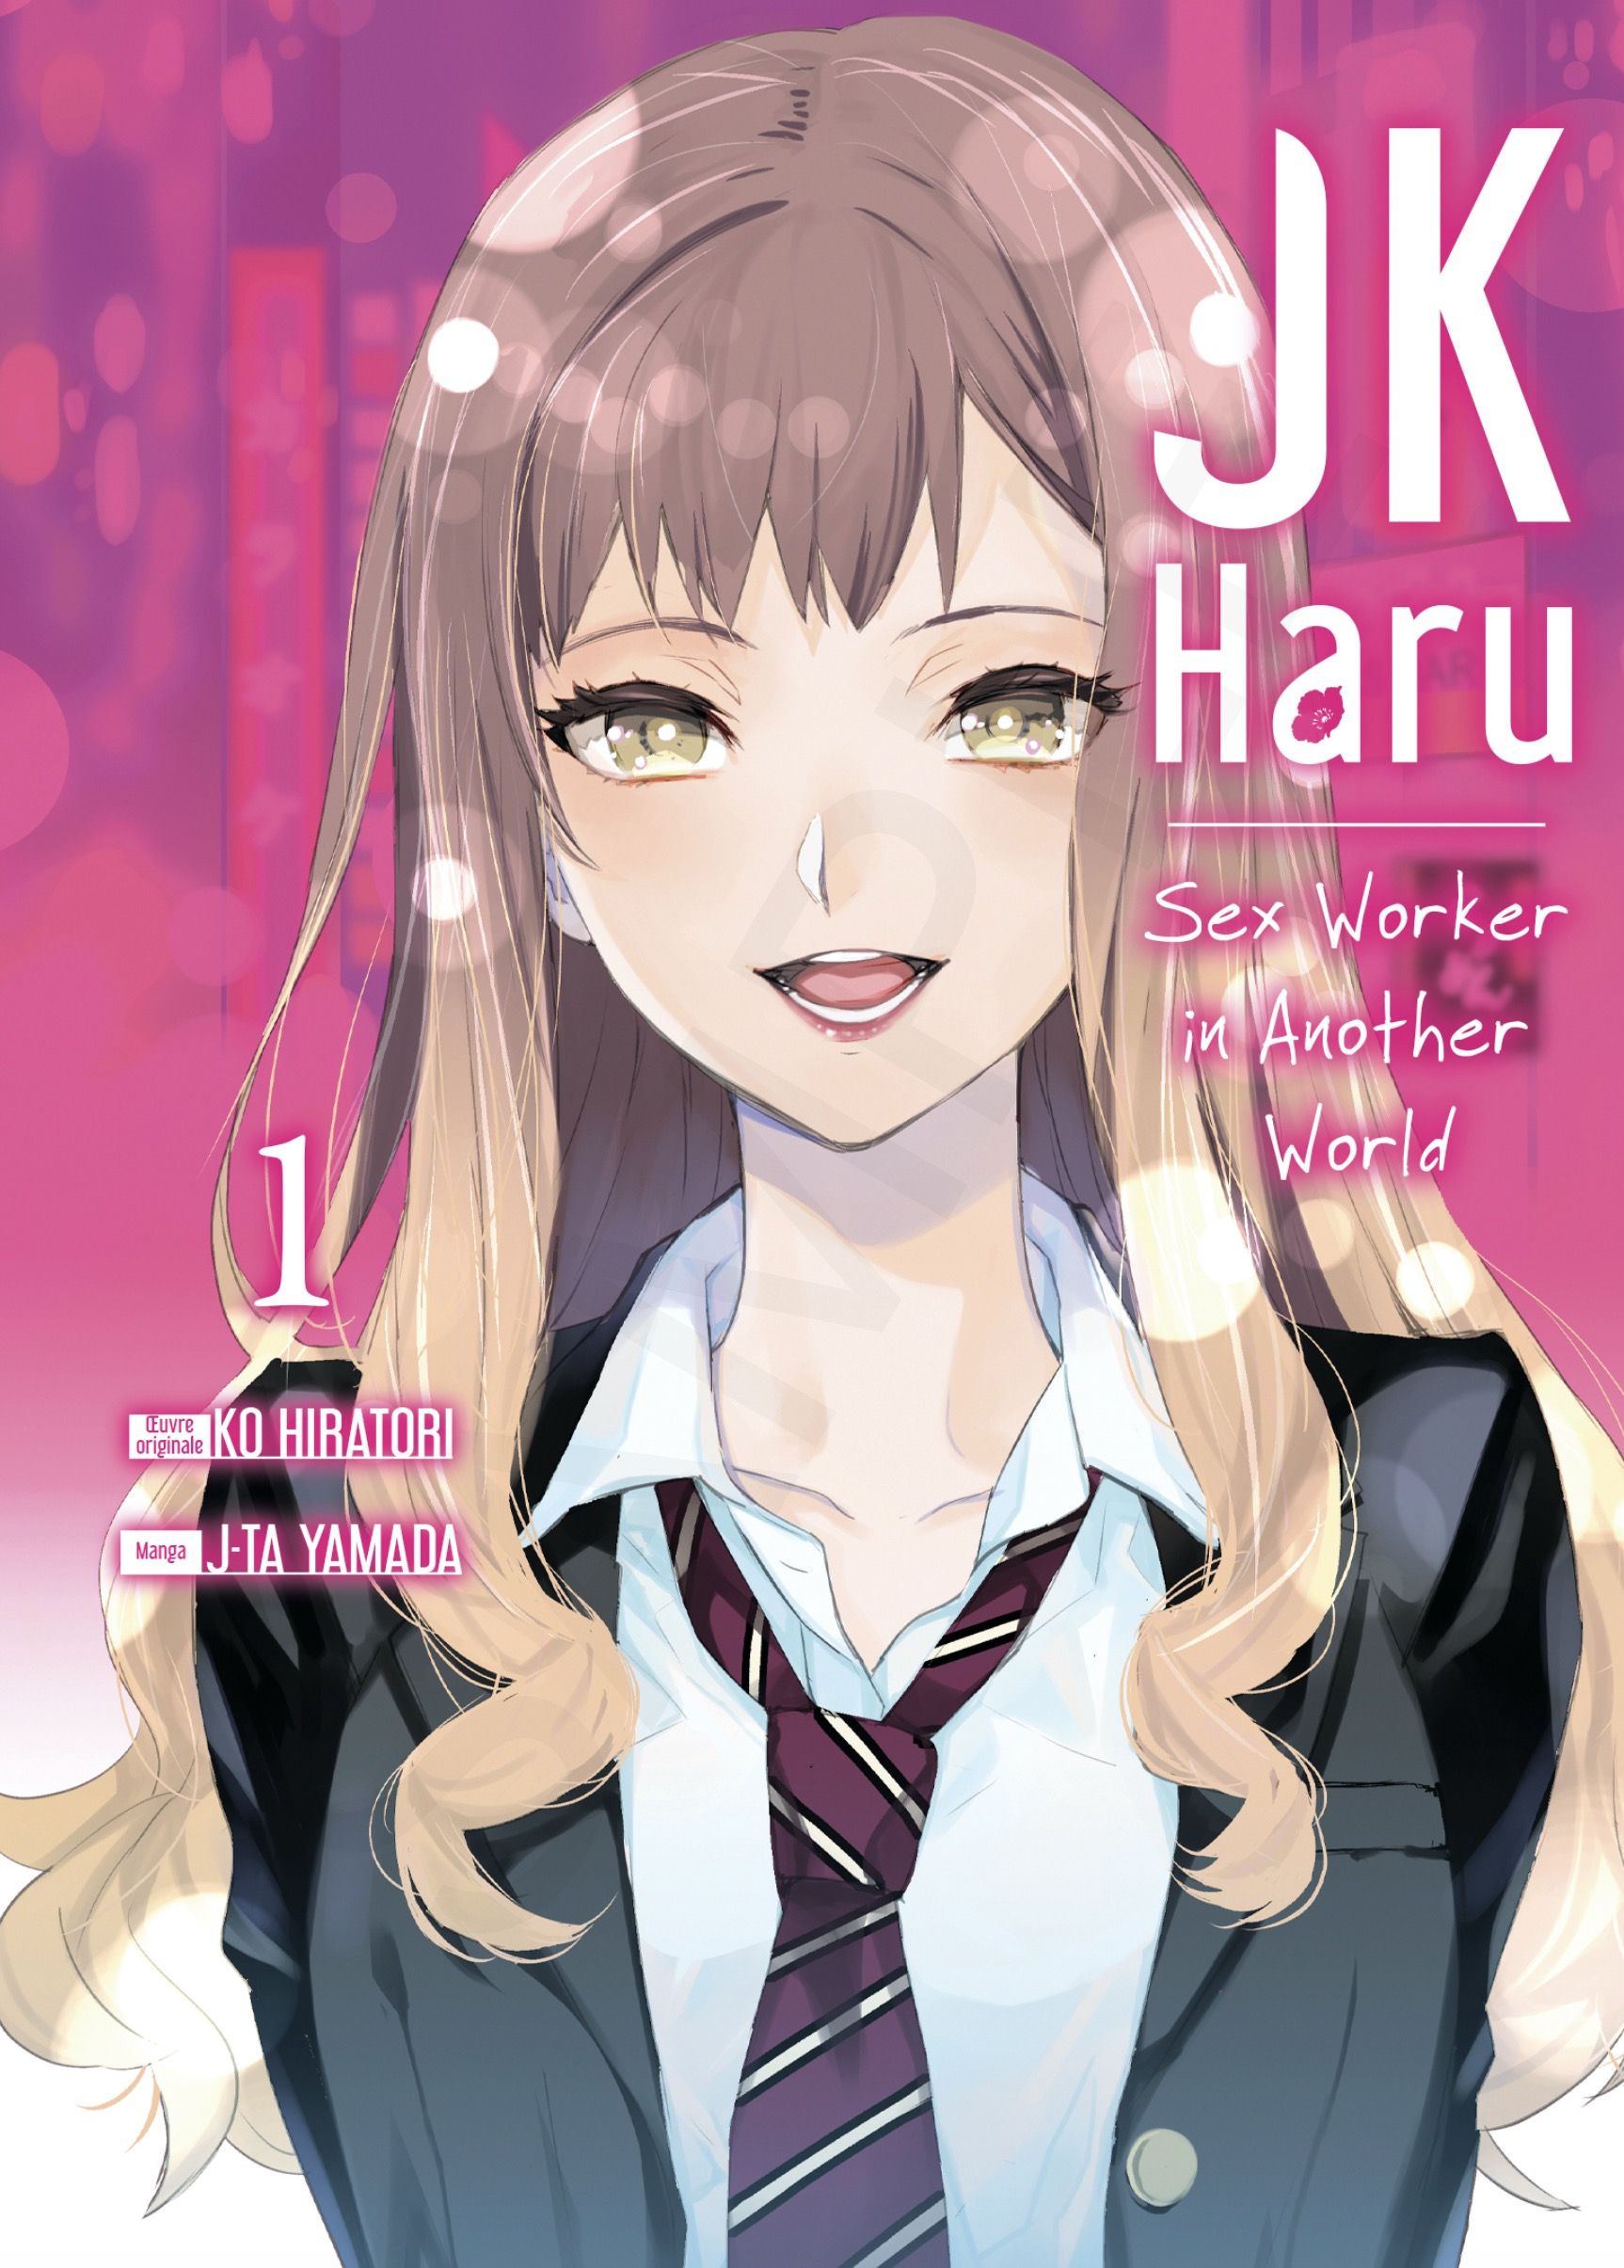 Jk Haru - Sex Worker in Another World Vol.1